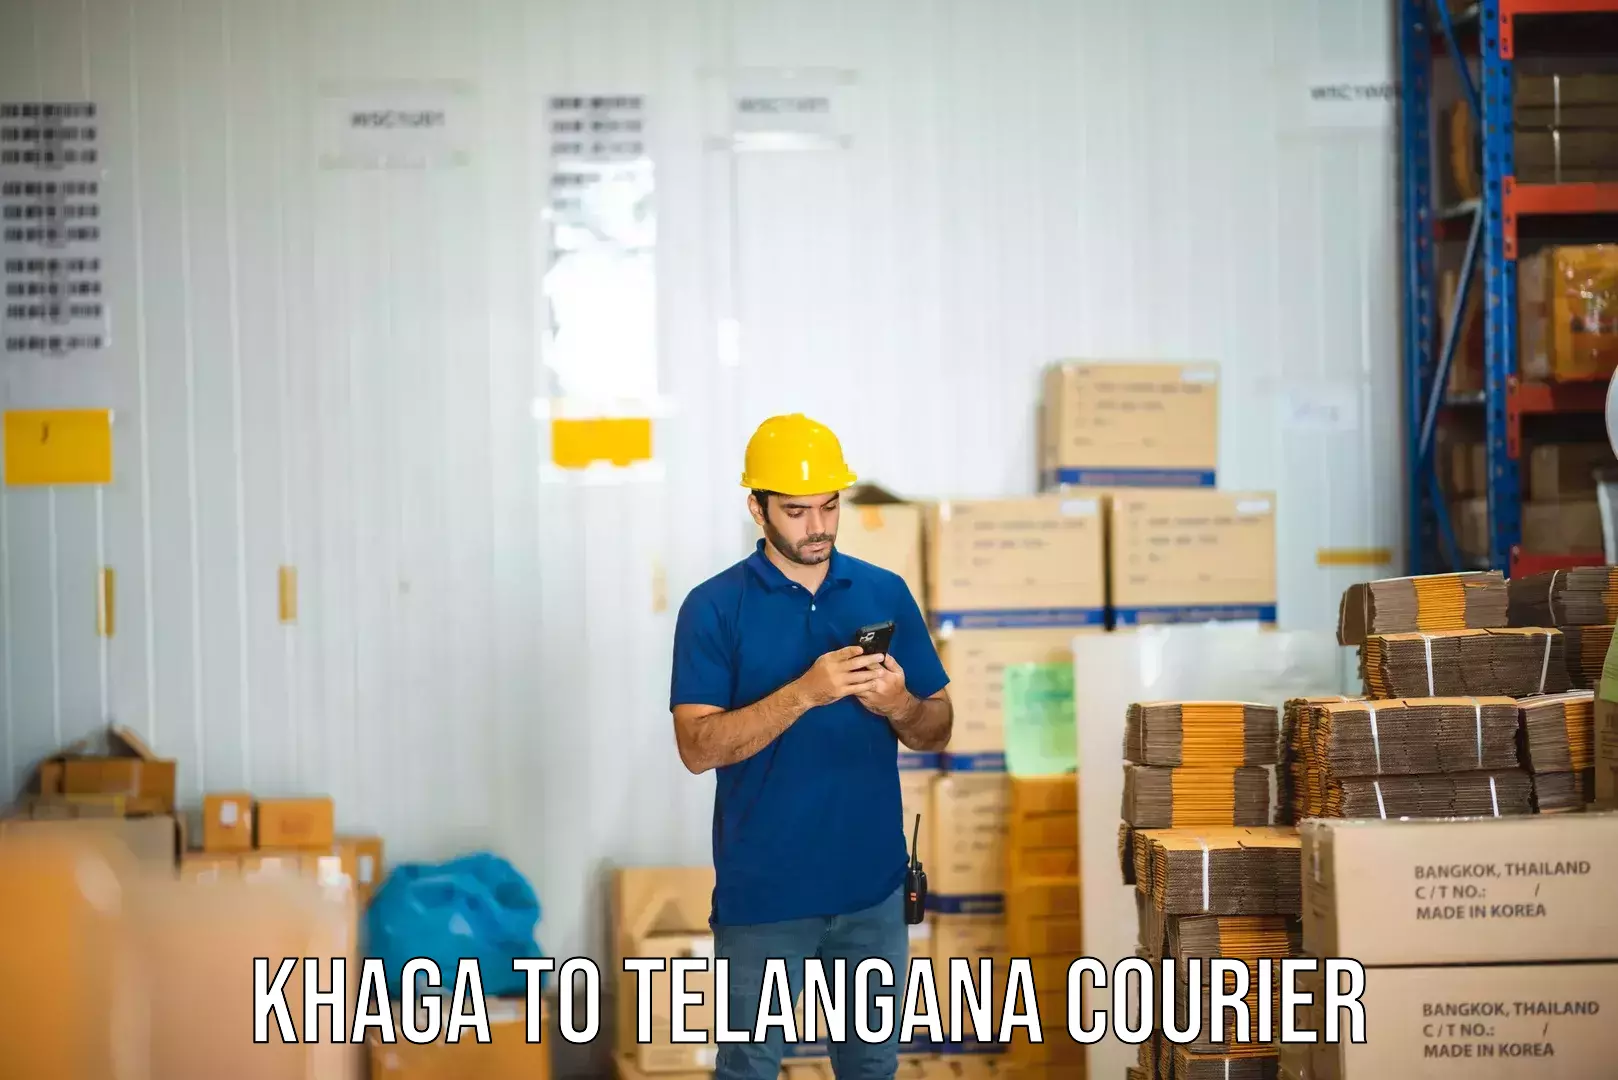 Budget-friendly shipping Khaga to Rayaparthi